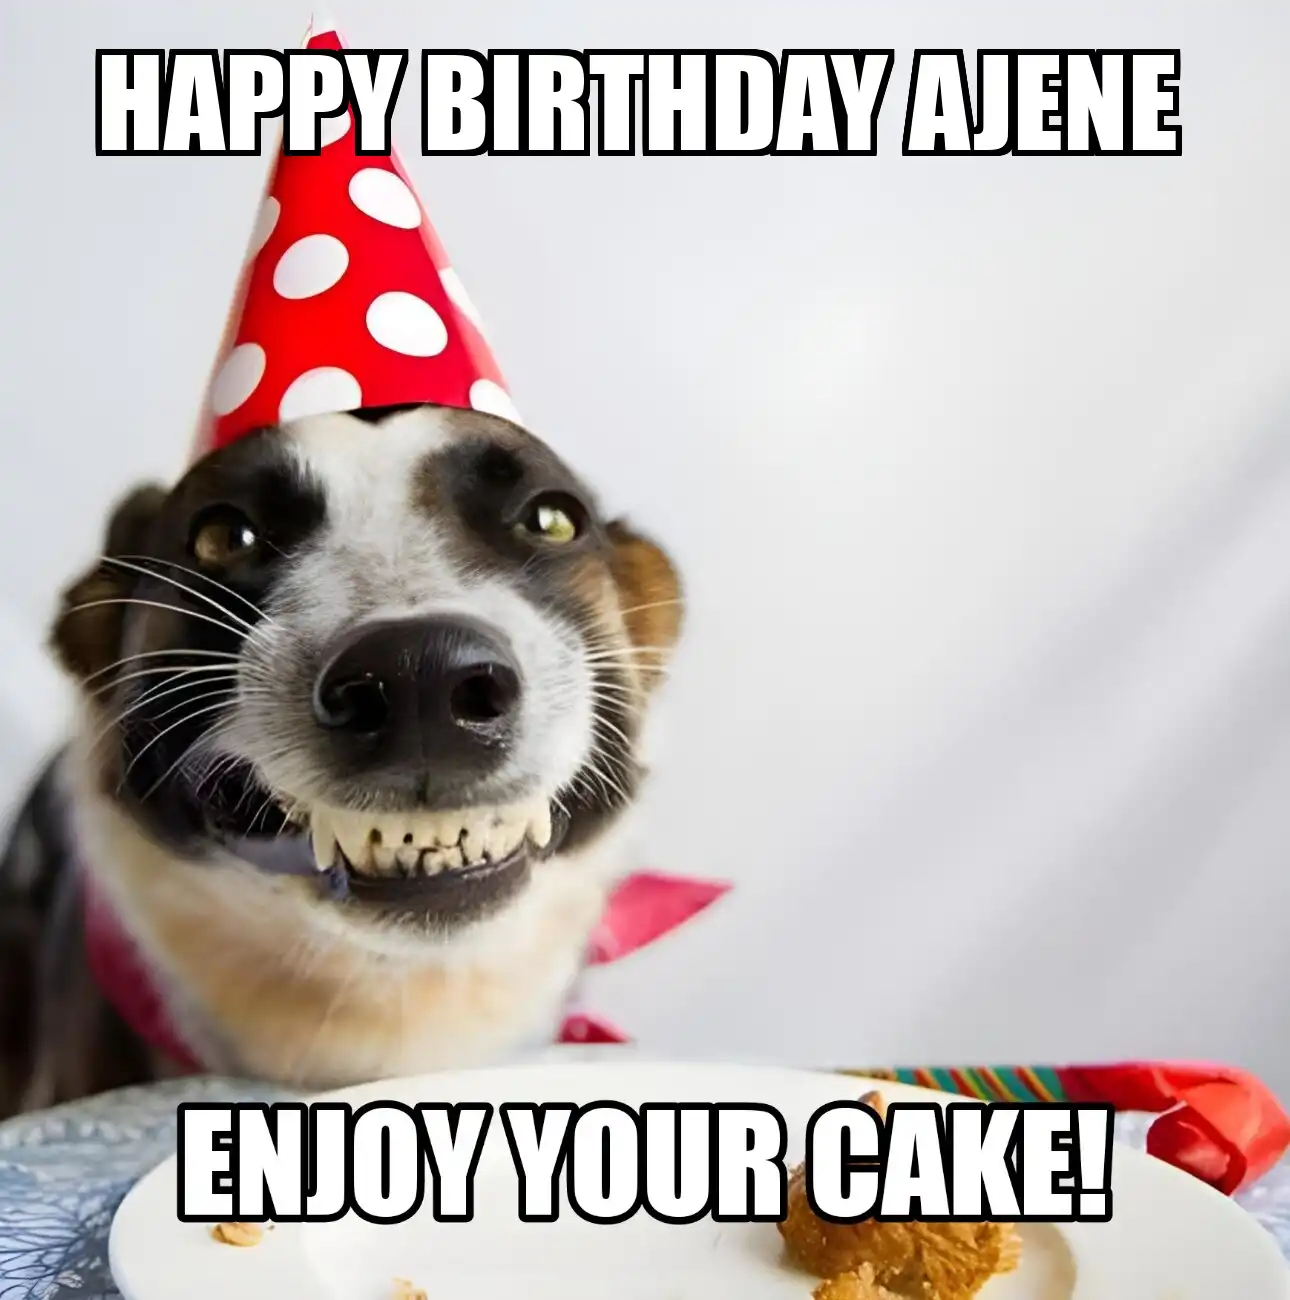 Happy Birthday Ajene Enjoy Your Cake Dog Meme